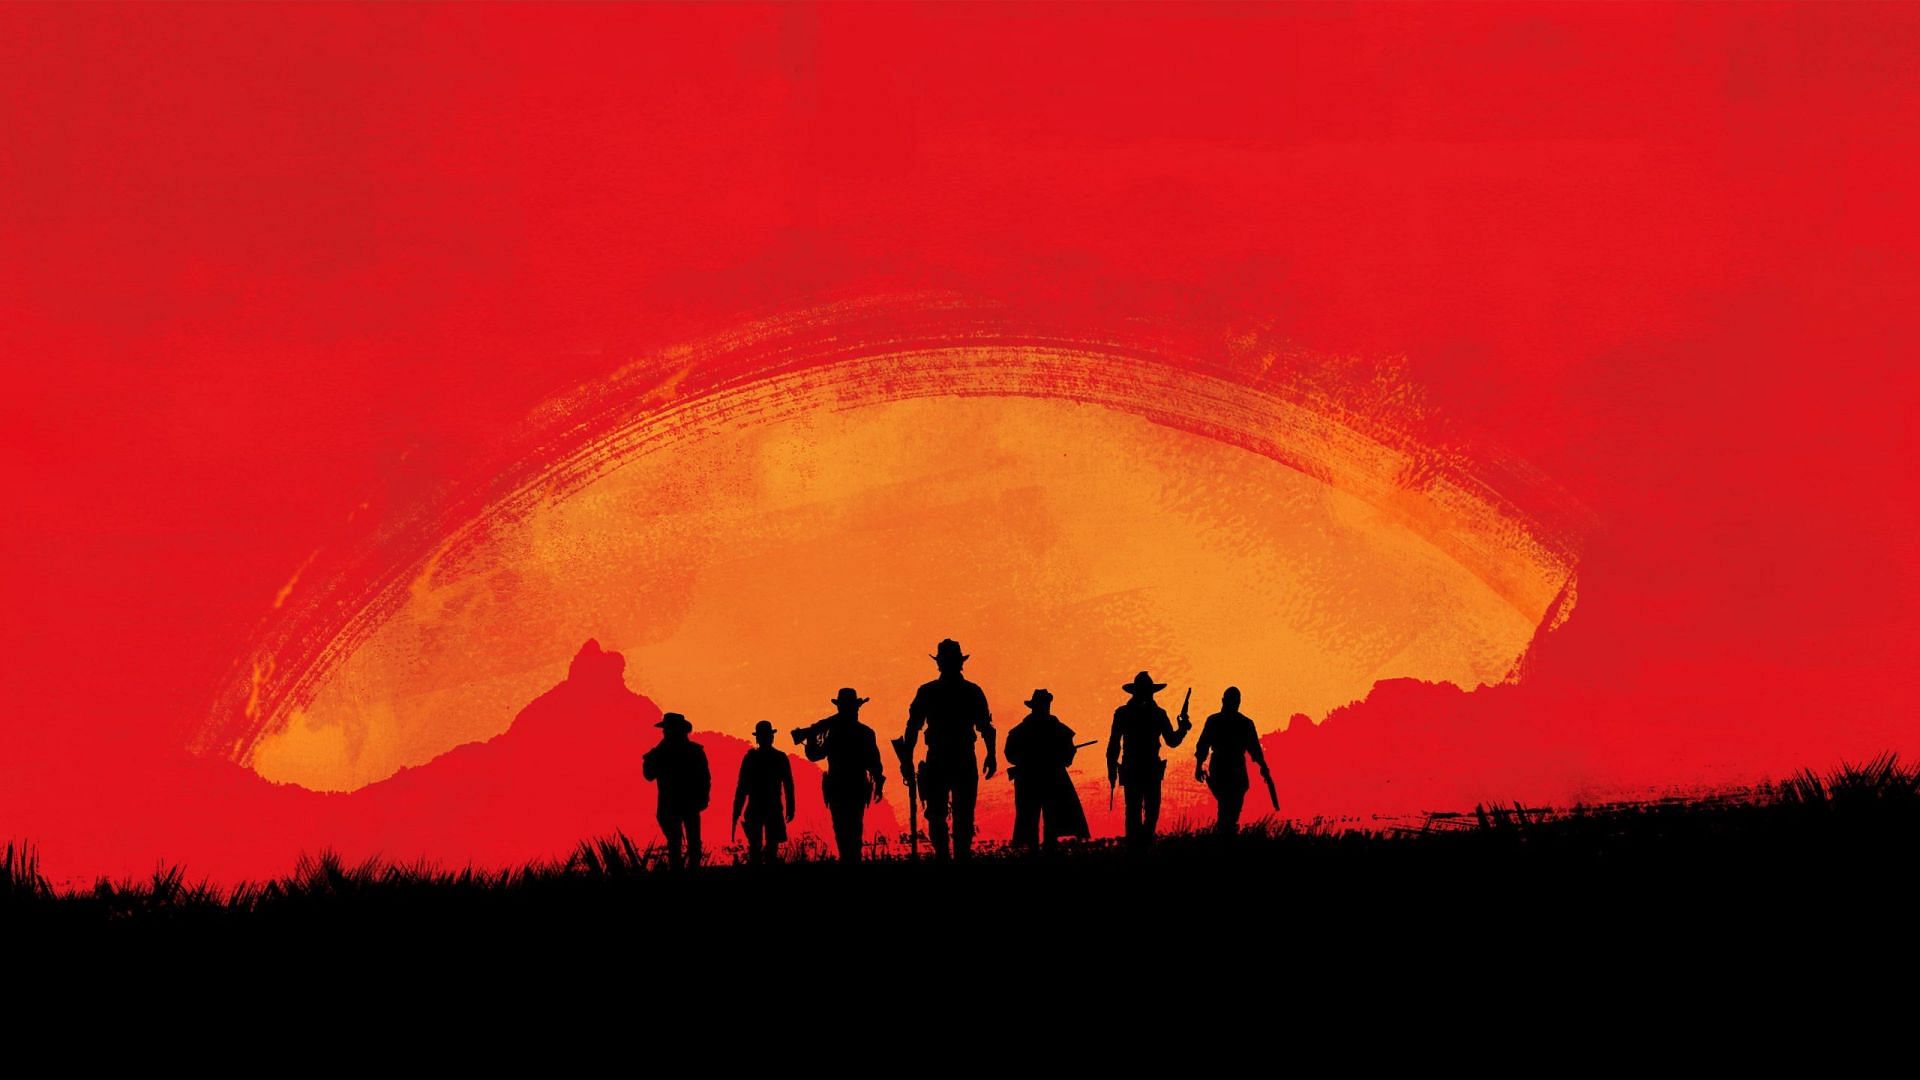 Red Dead Redemption II (Image via Wallpaper Access)